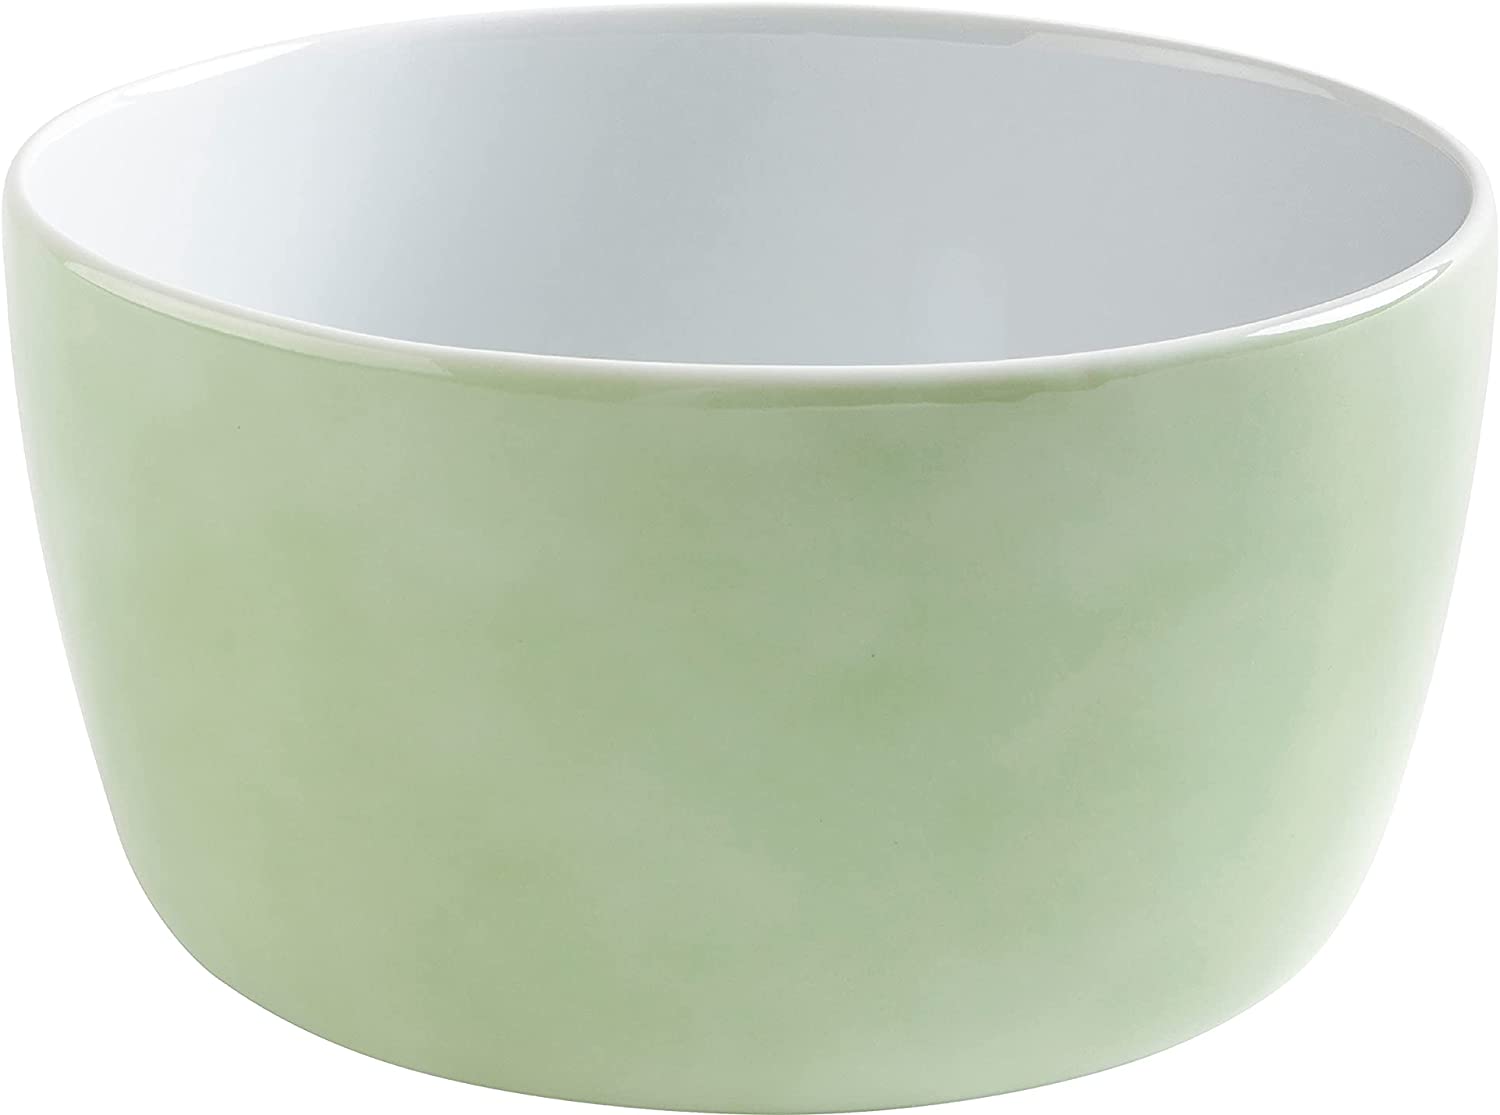 Kahla Magic Grip Five Senses Medium-Dish, Motif: Wild Flower, Watercolour / Green, Porcelain, 19 cm, 392948A69358C MG